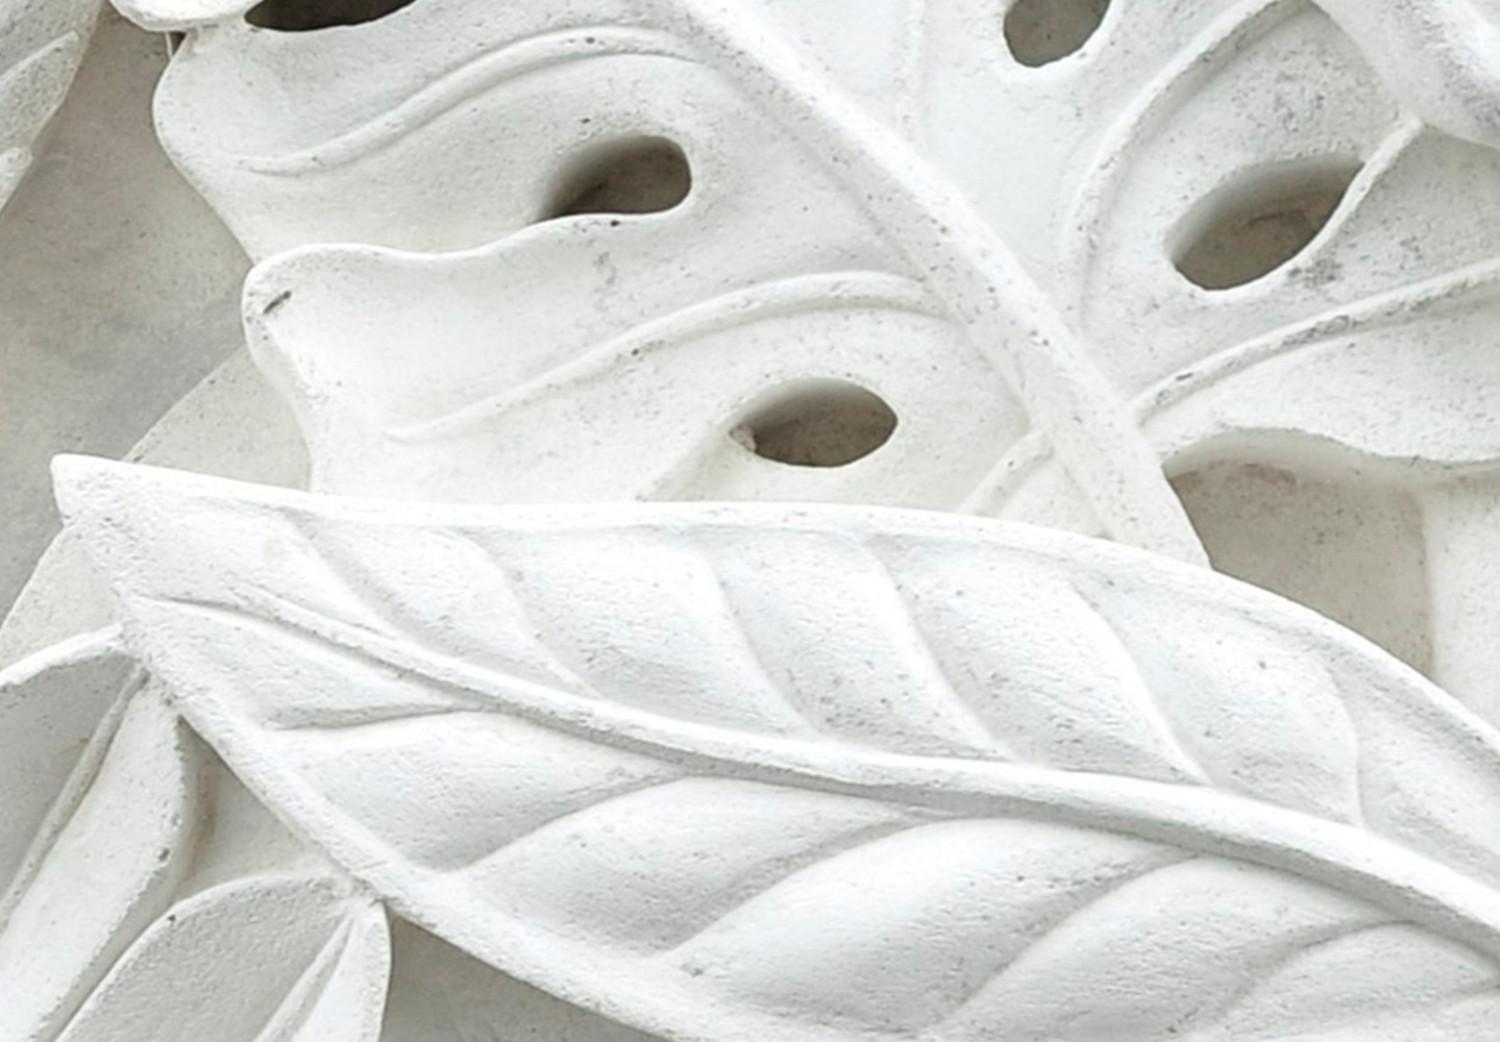 Canvas Alabaster Garden (1-part) - white ornament in plant motif